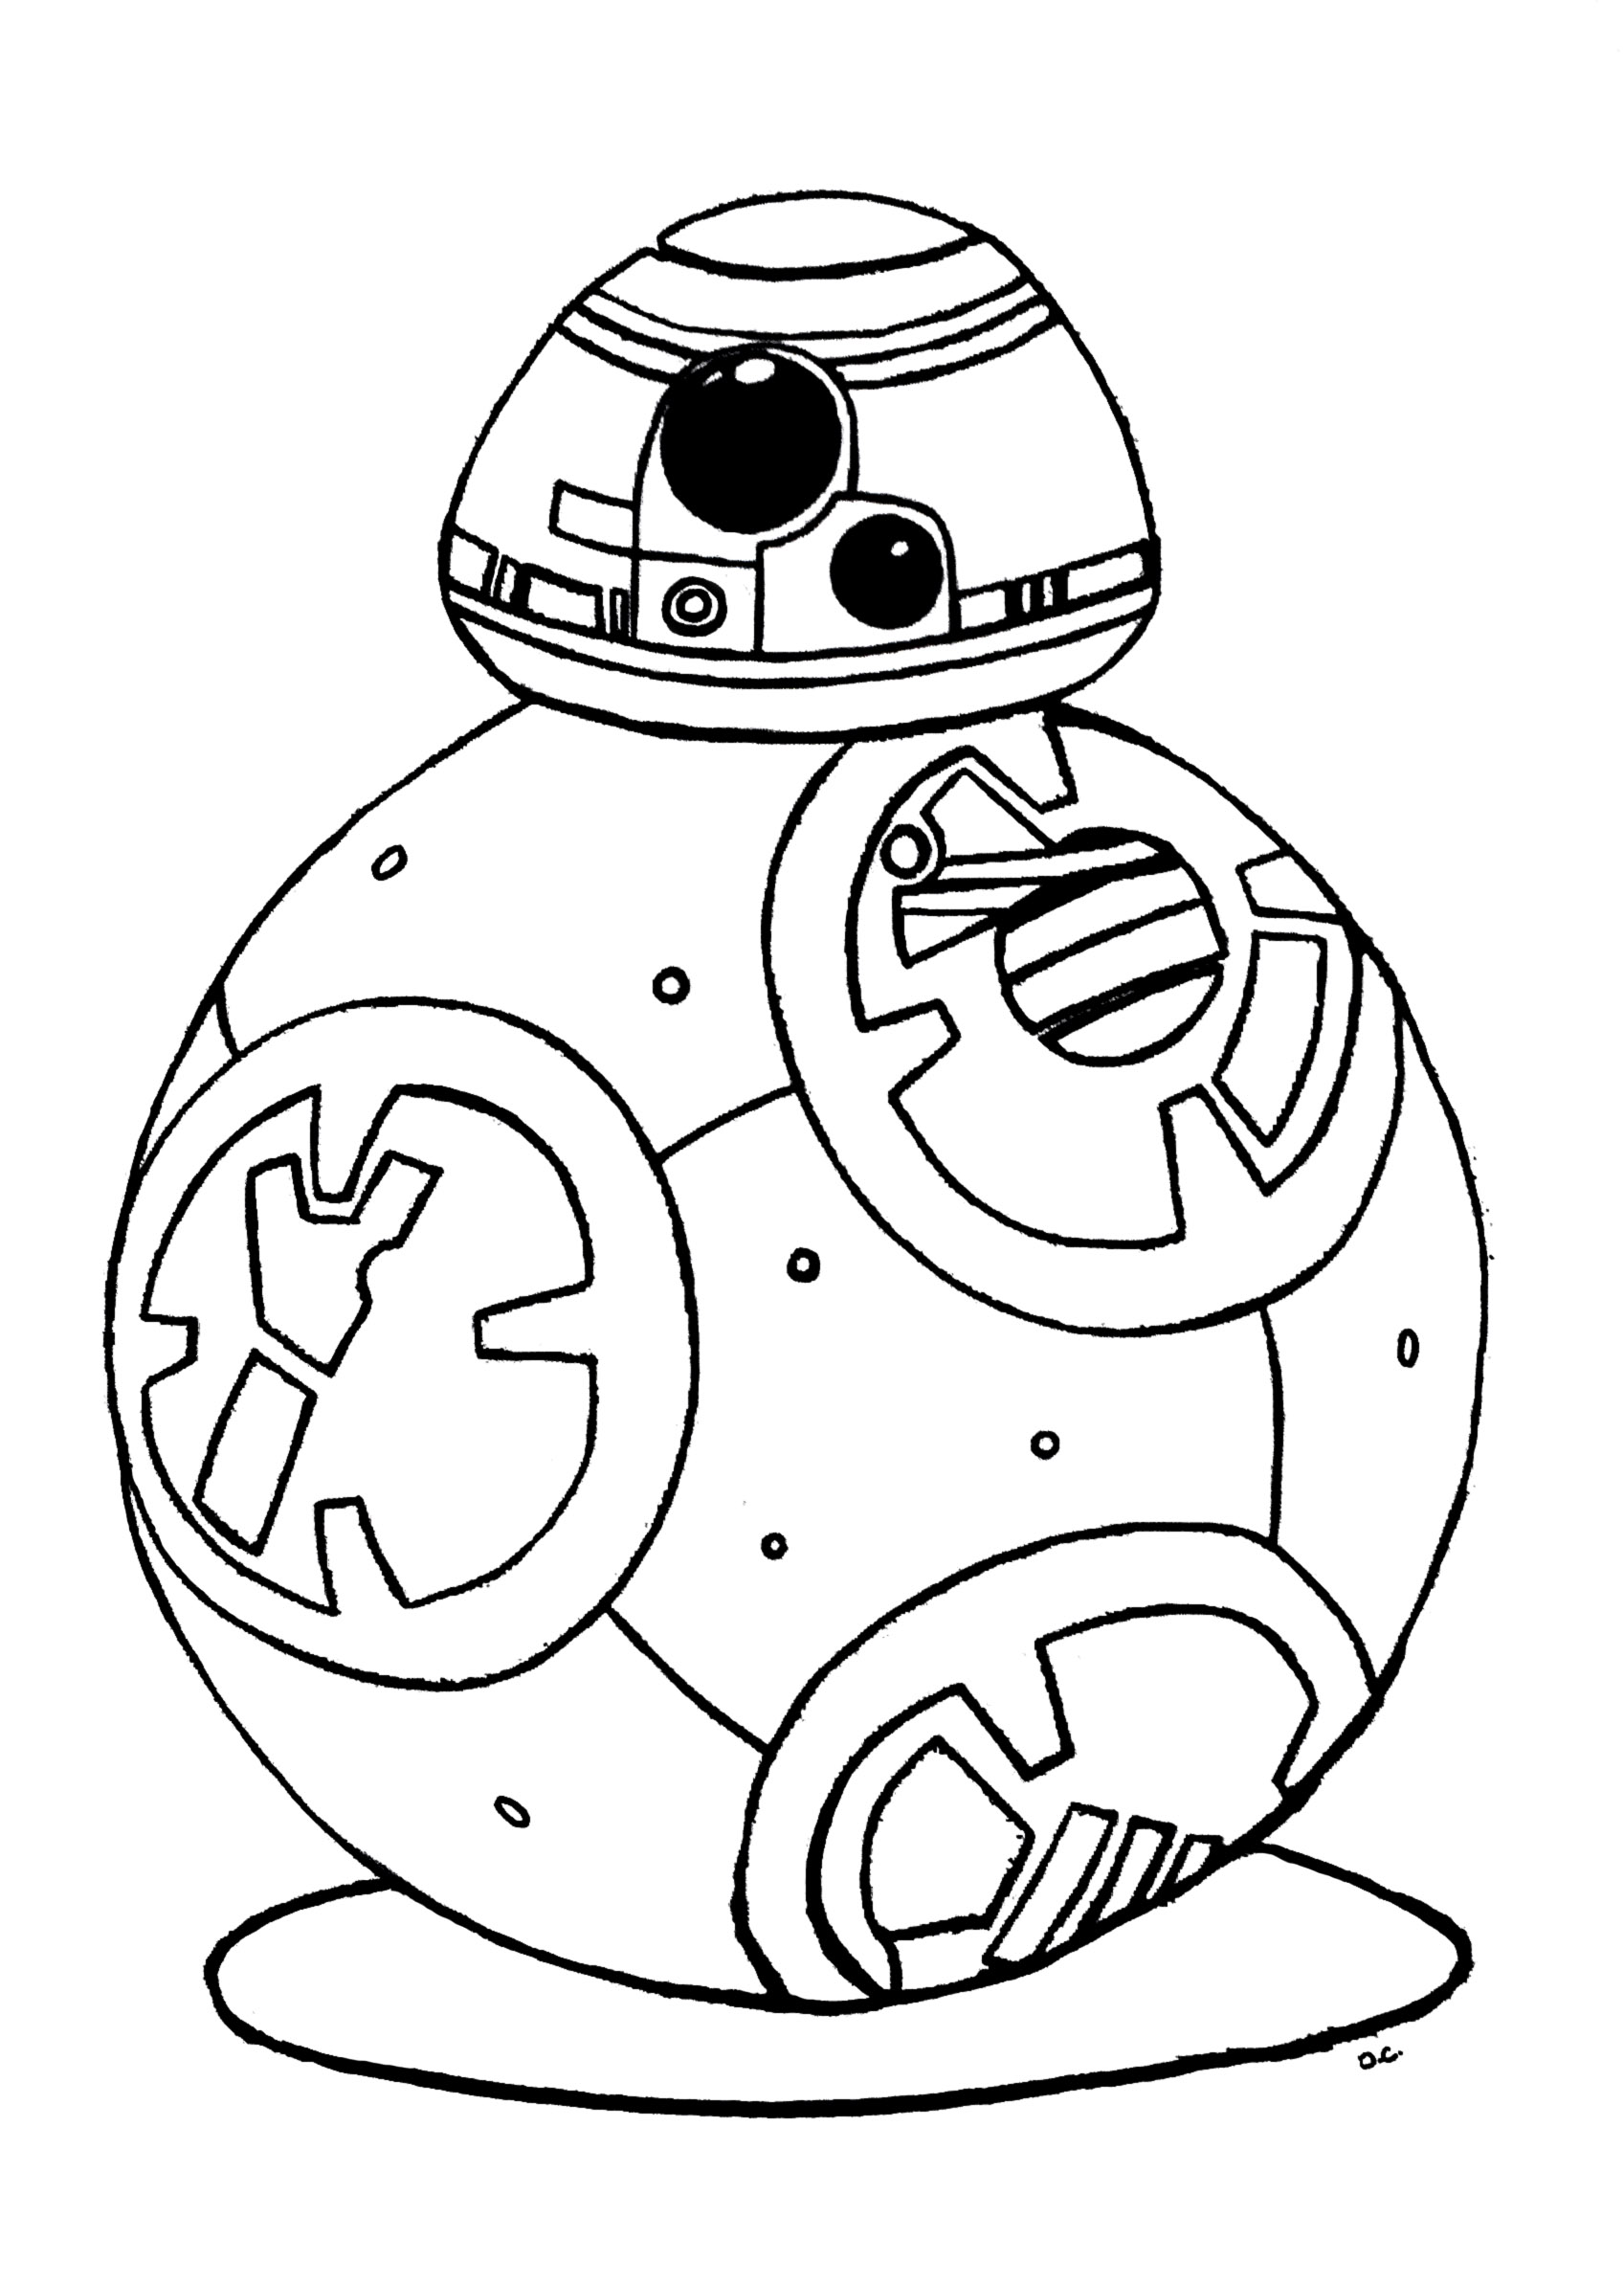 Página para colorear inspirada en el robot droide BB-8 de Star Wars 7 (The Force Awakens)